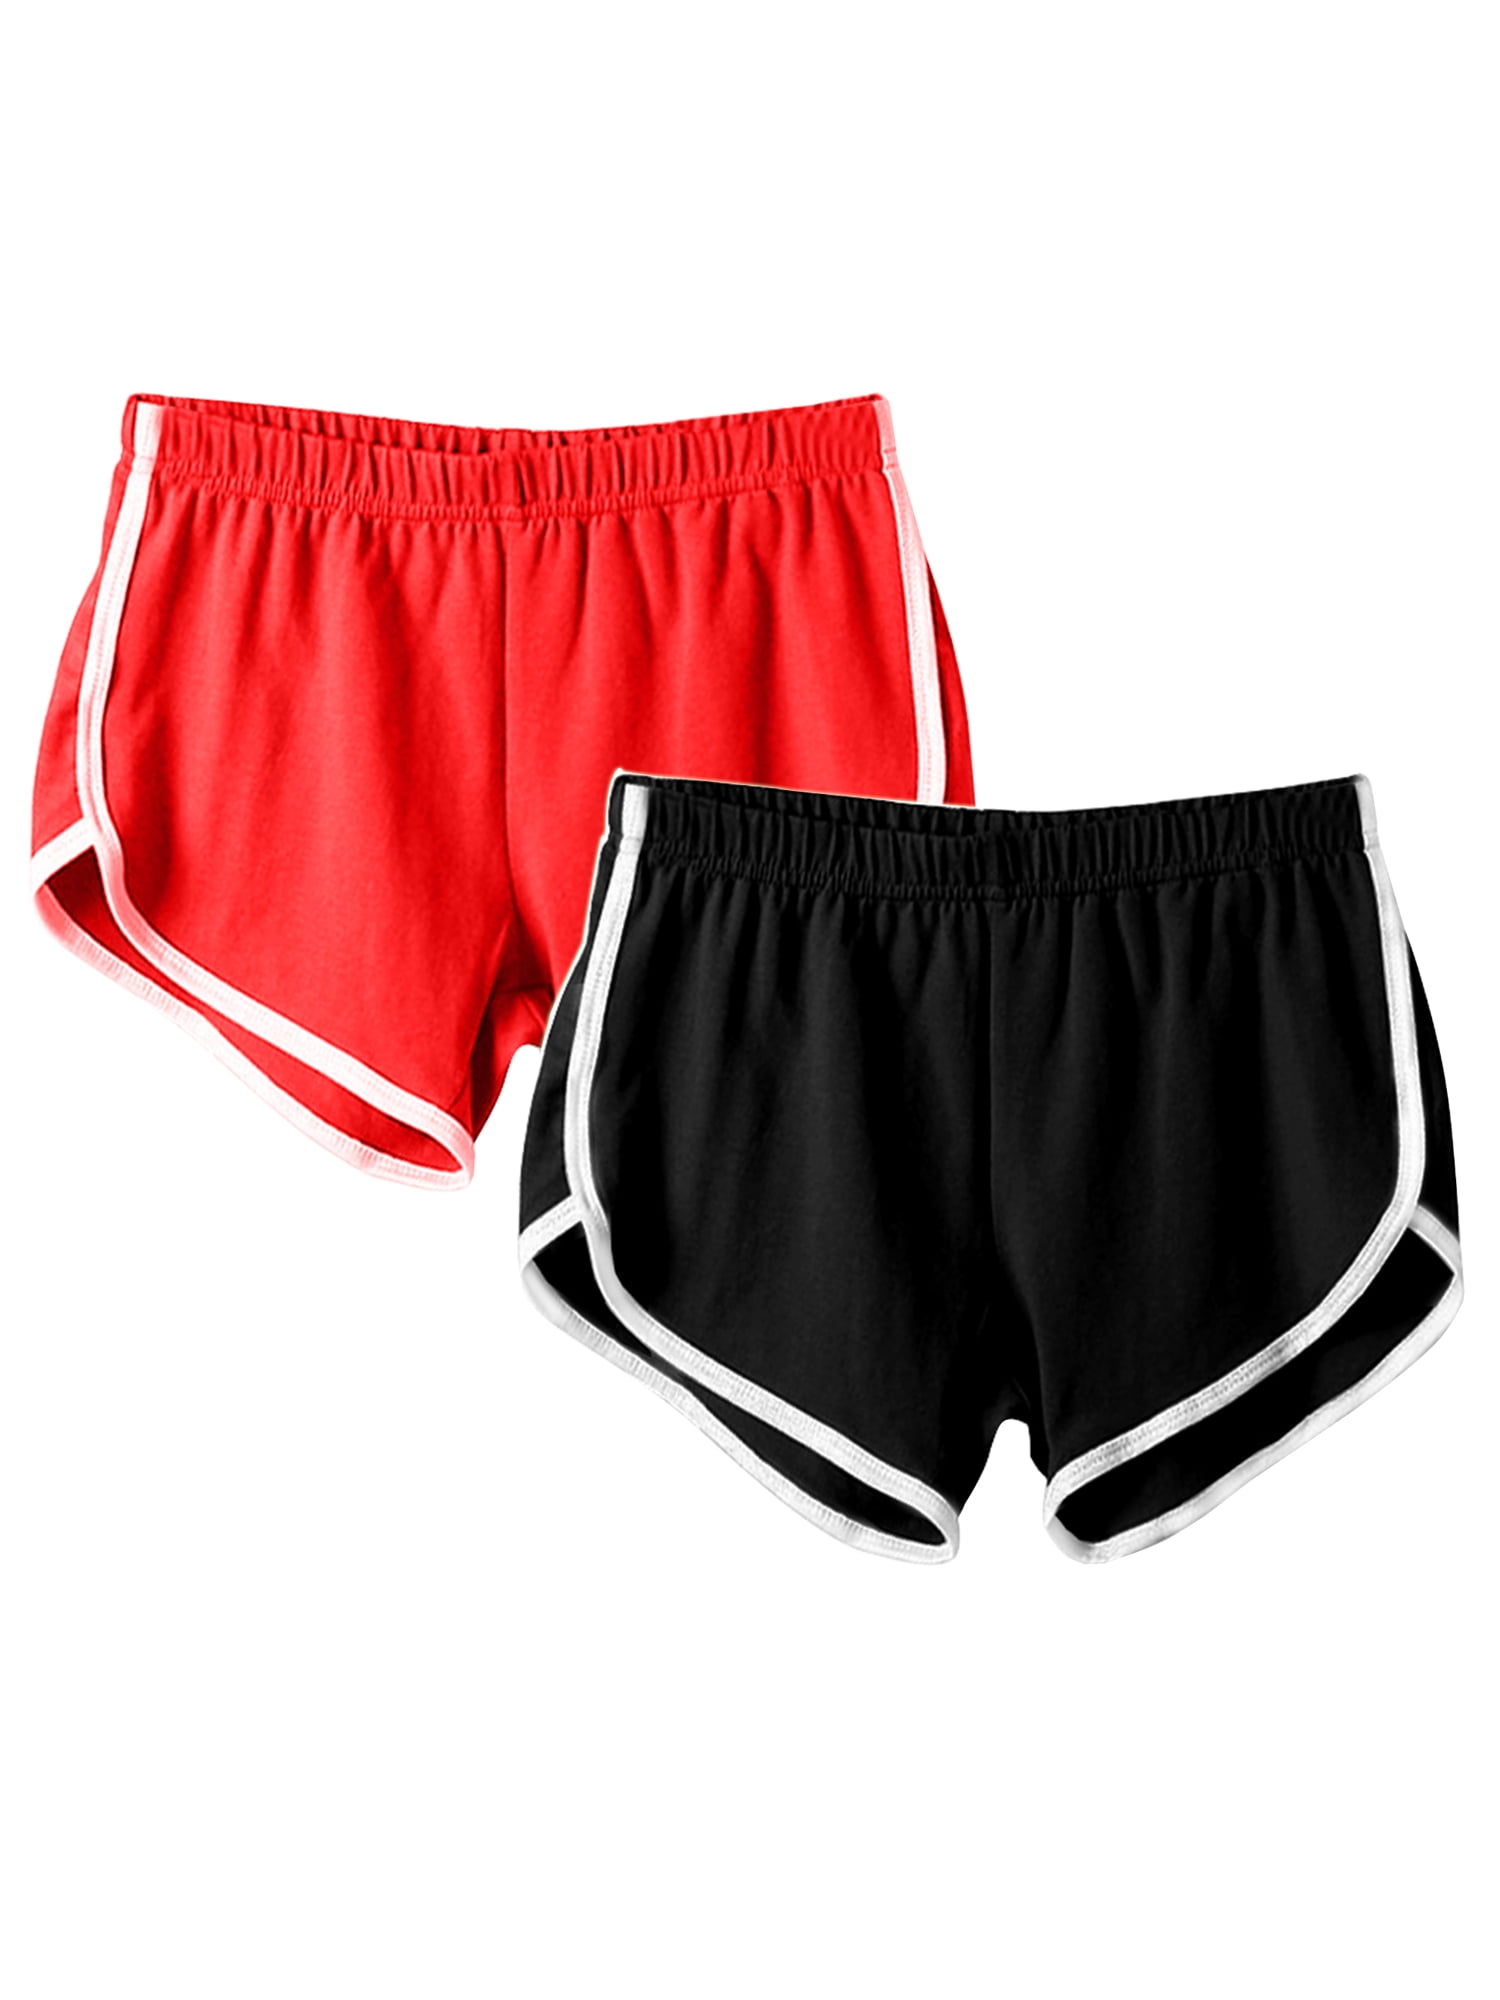 Women Sport Short Fitness Running Short Pants Outdoor Elastic Summer Sport Girl-Black & Black S